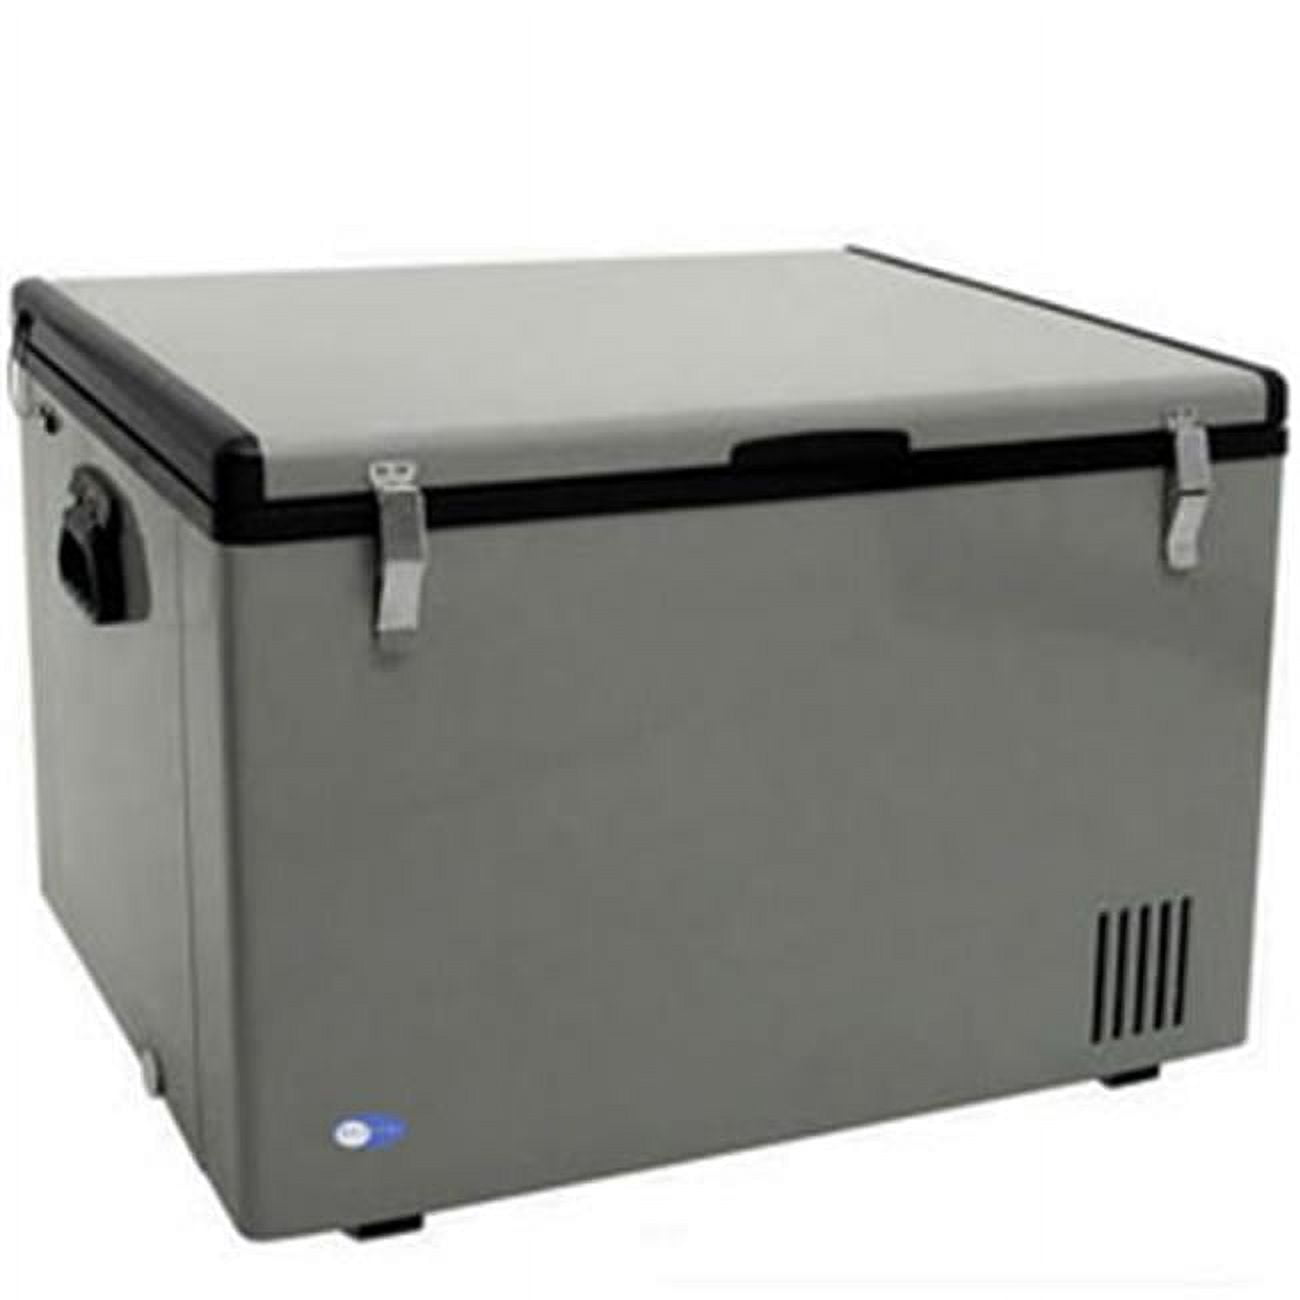 WANAI Chest Freezer, 5.0 Cu. ft Compact Mini Freezer with Low Noise &  Energy Saving, Deep Freezer,Black 